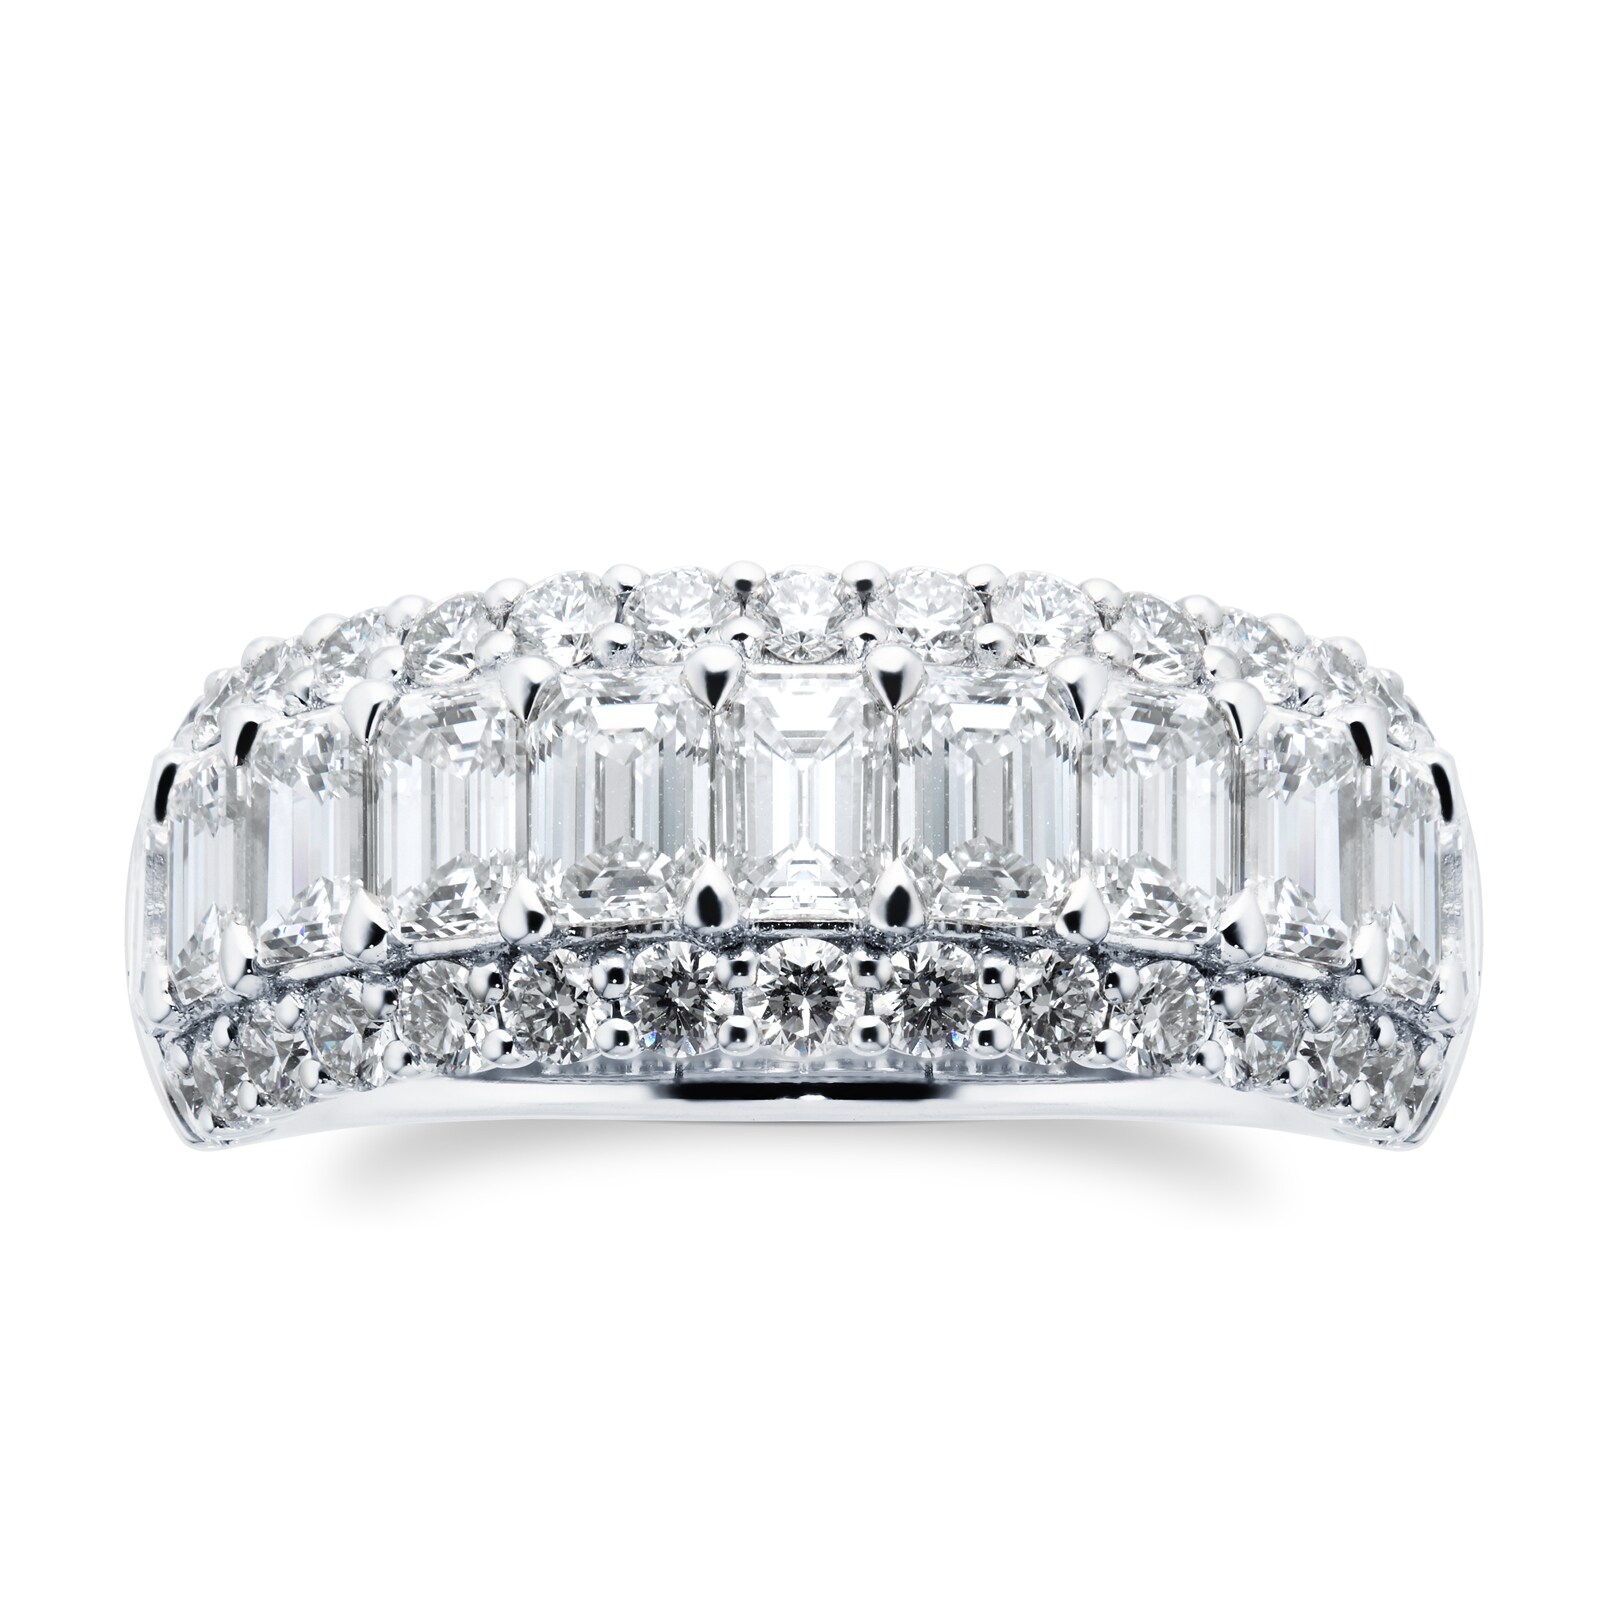 Platinum 3.58cttw Emerald Cut Multi Row Diamond Ring - Ring Size O